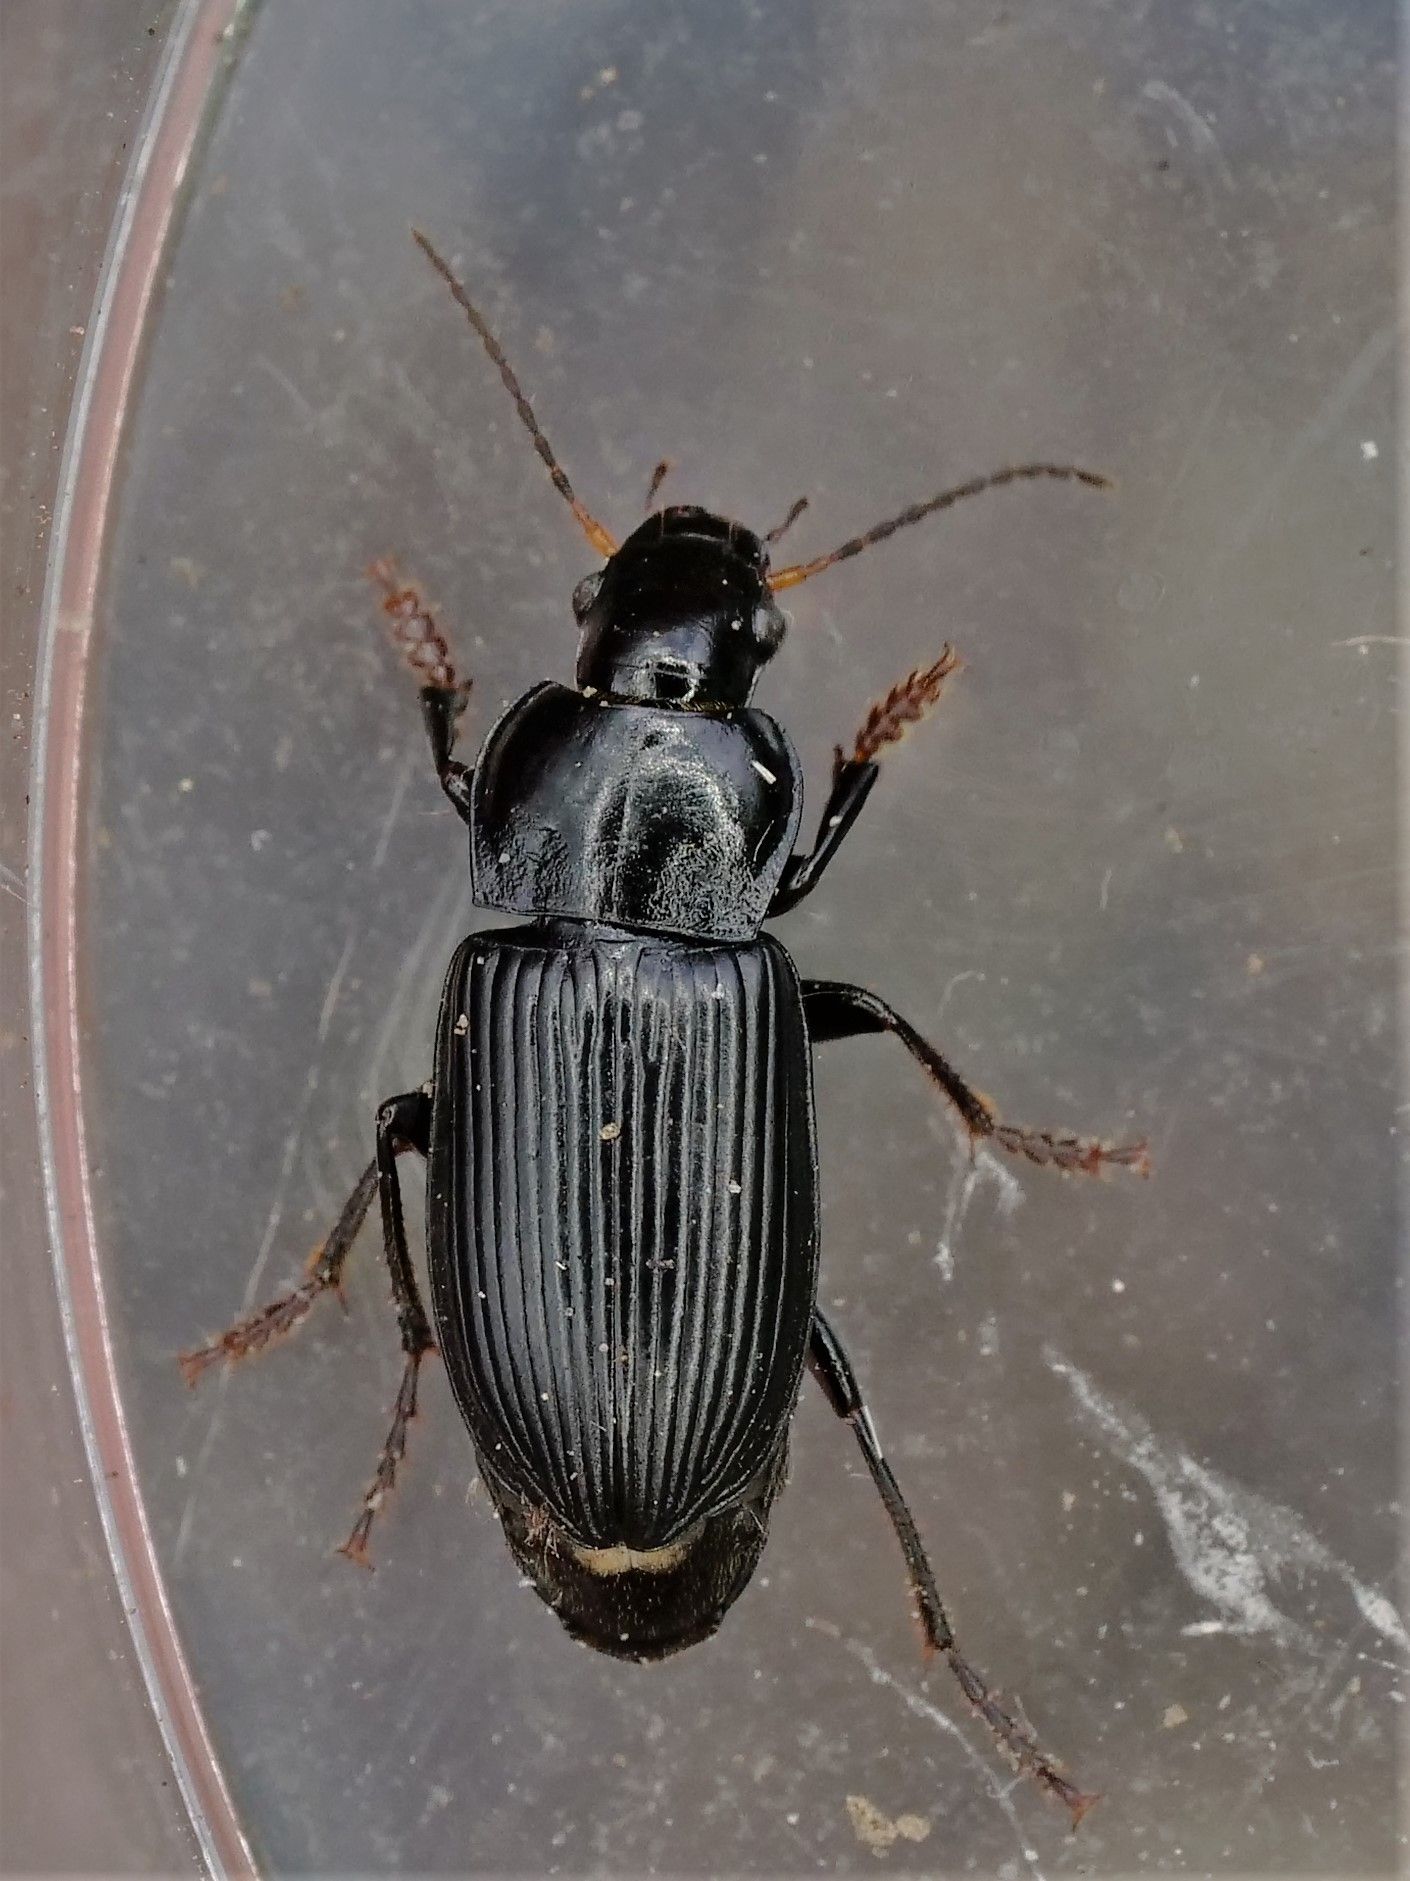 Anisodactylus binotatus (Fabricius – 1787) (a Ground-beetle